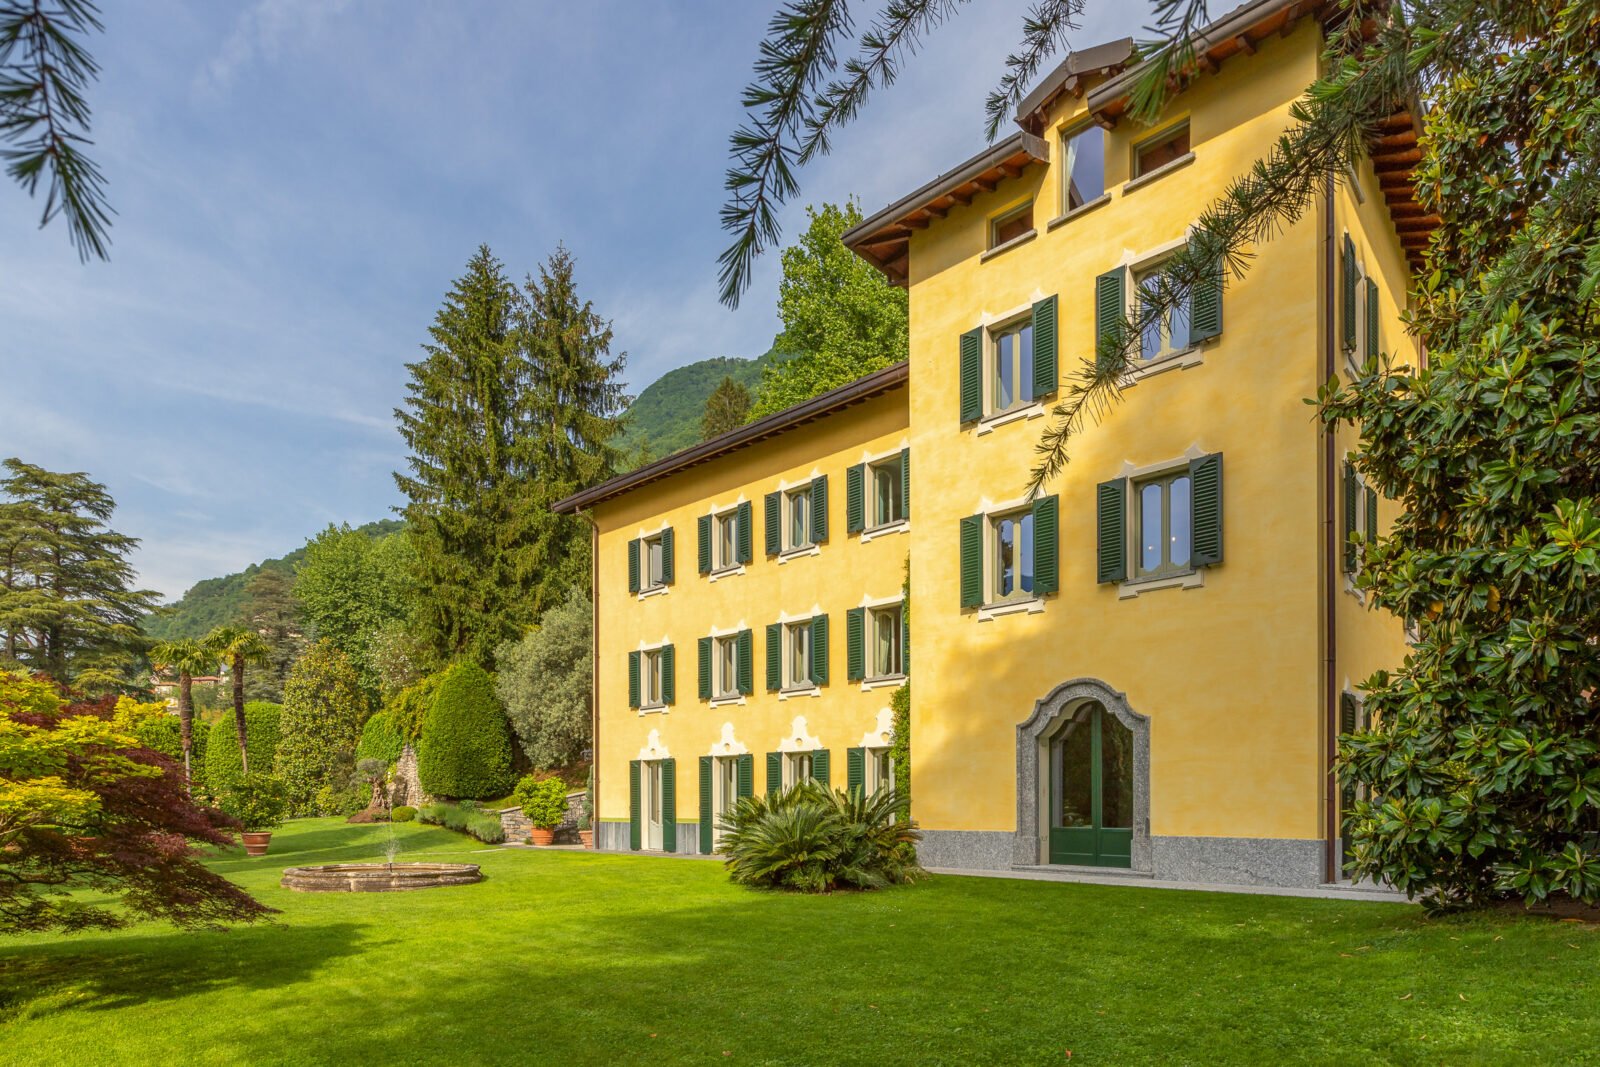 Francis York Waterfront Villa on Lake Como, Italy10.jpg